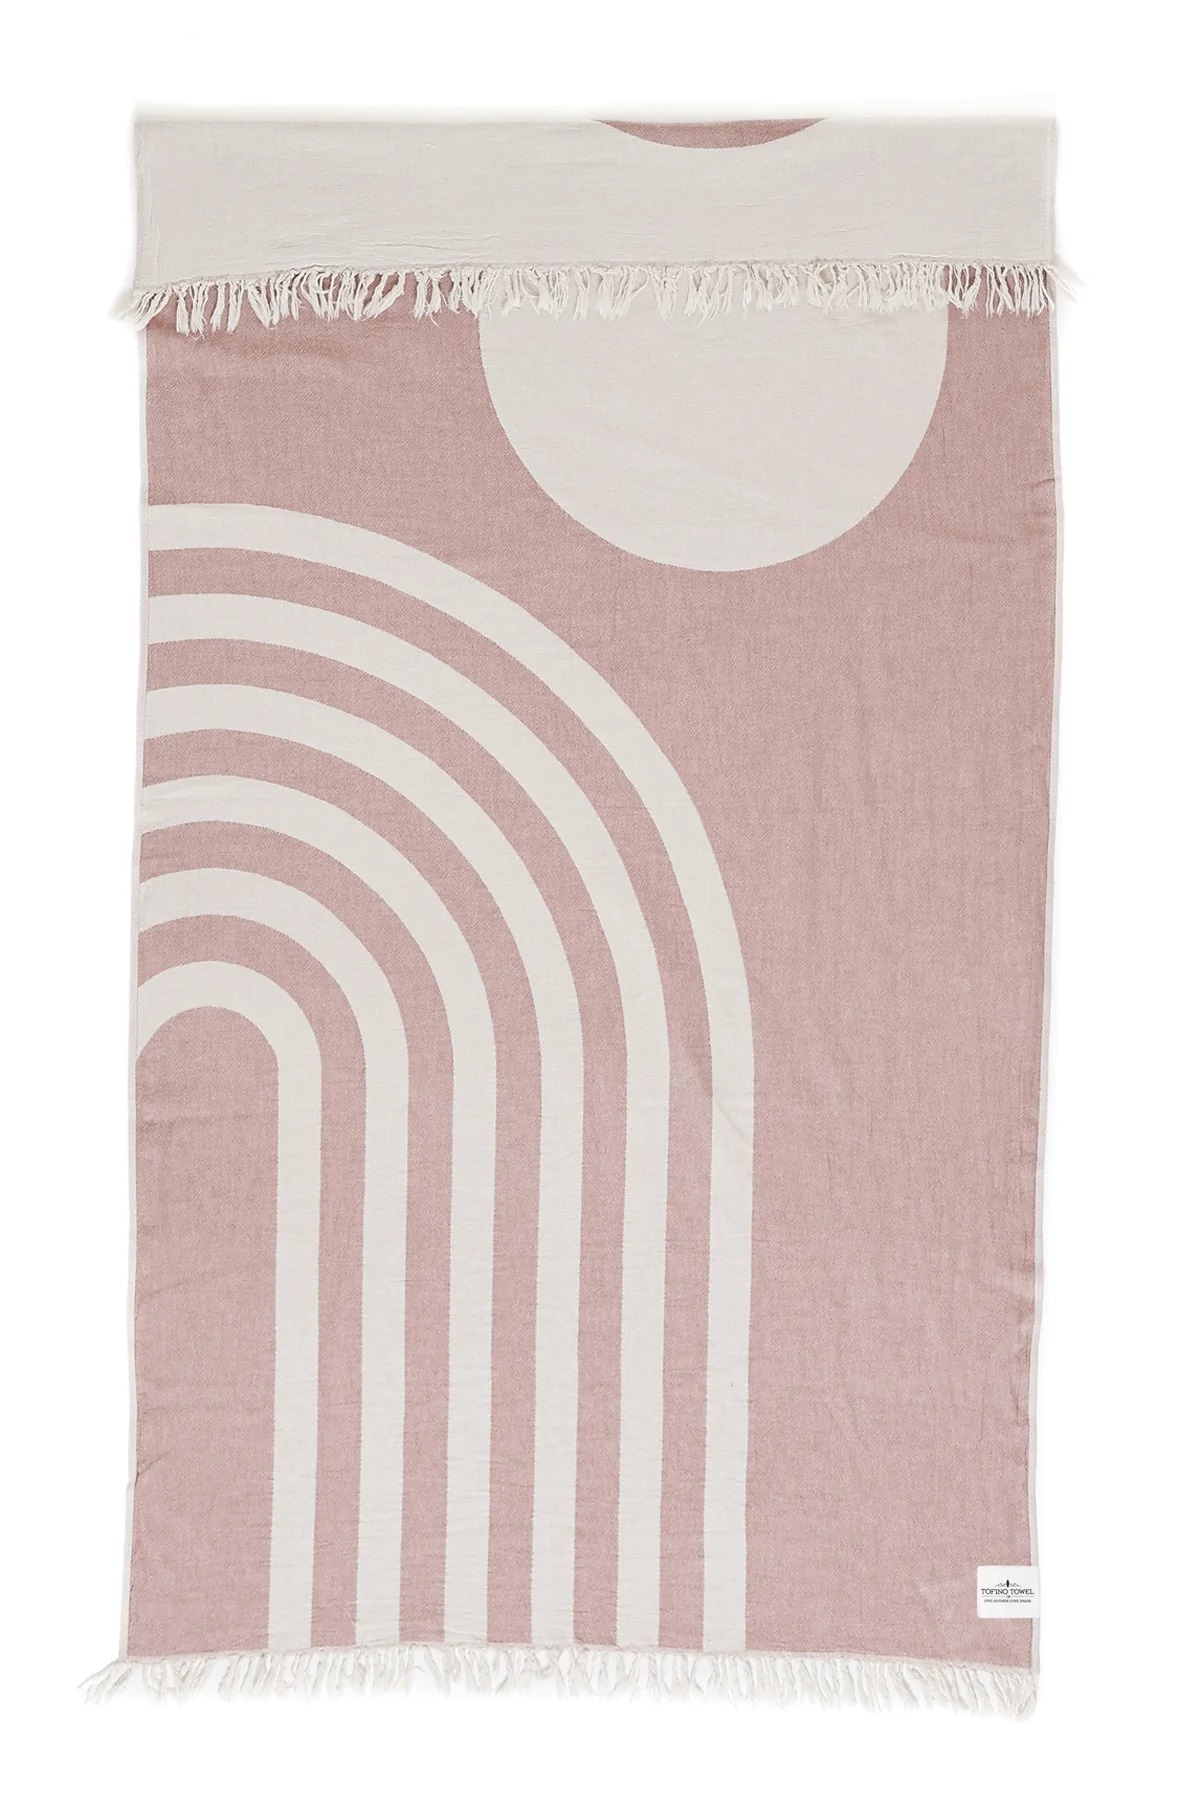 Tofino Towel Co Tofino Towel Co.- Retro Curve Beach Towel